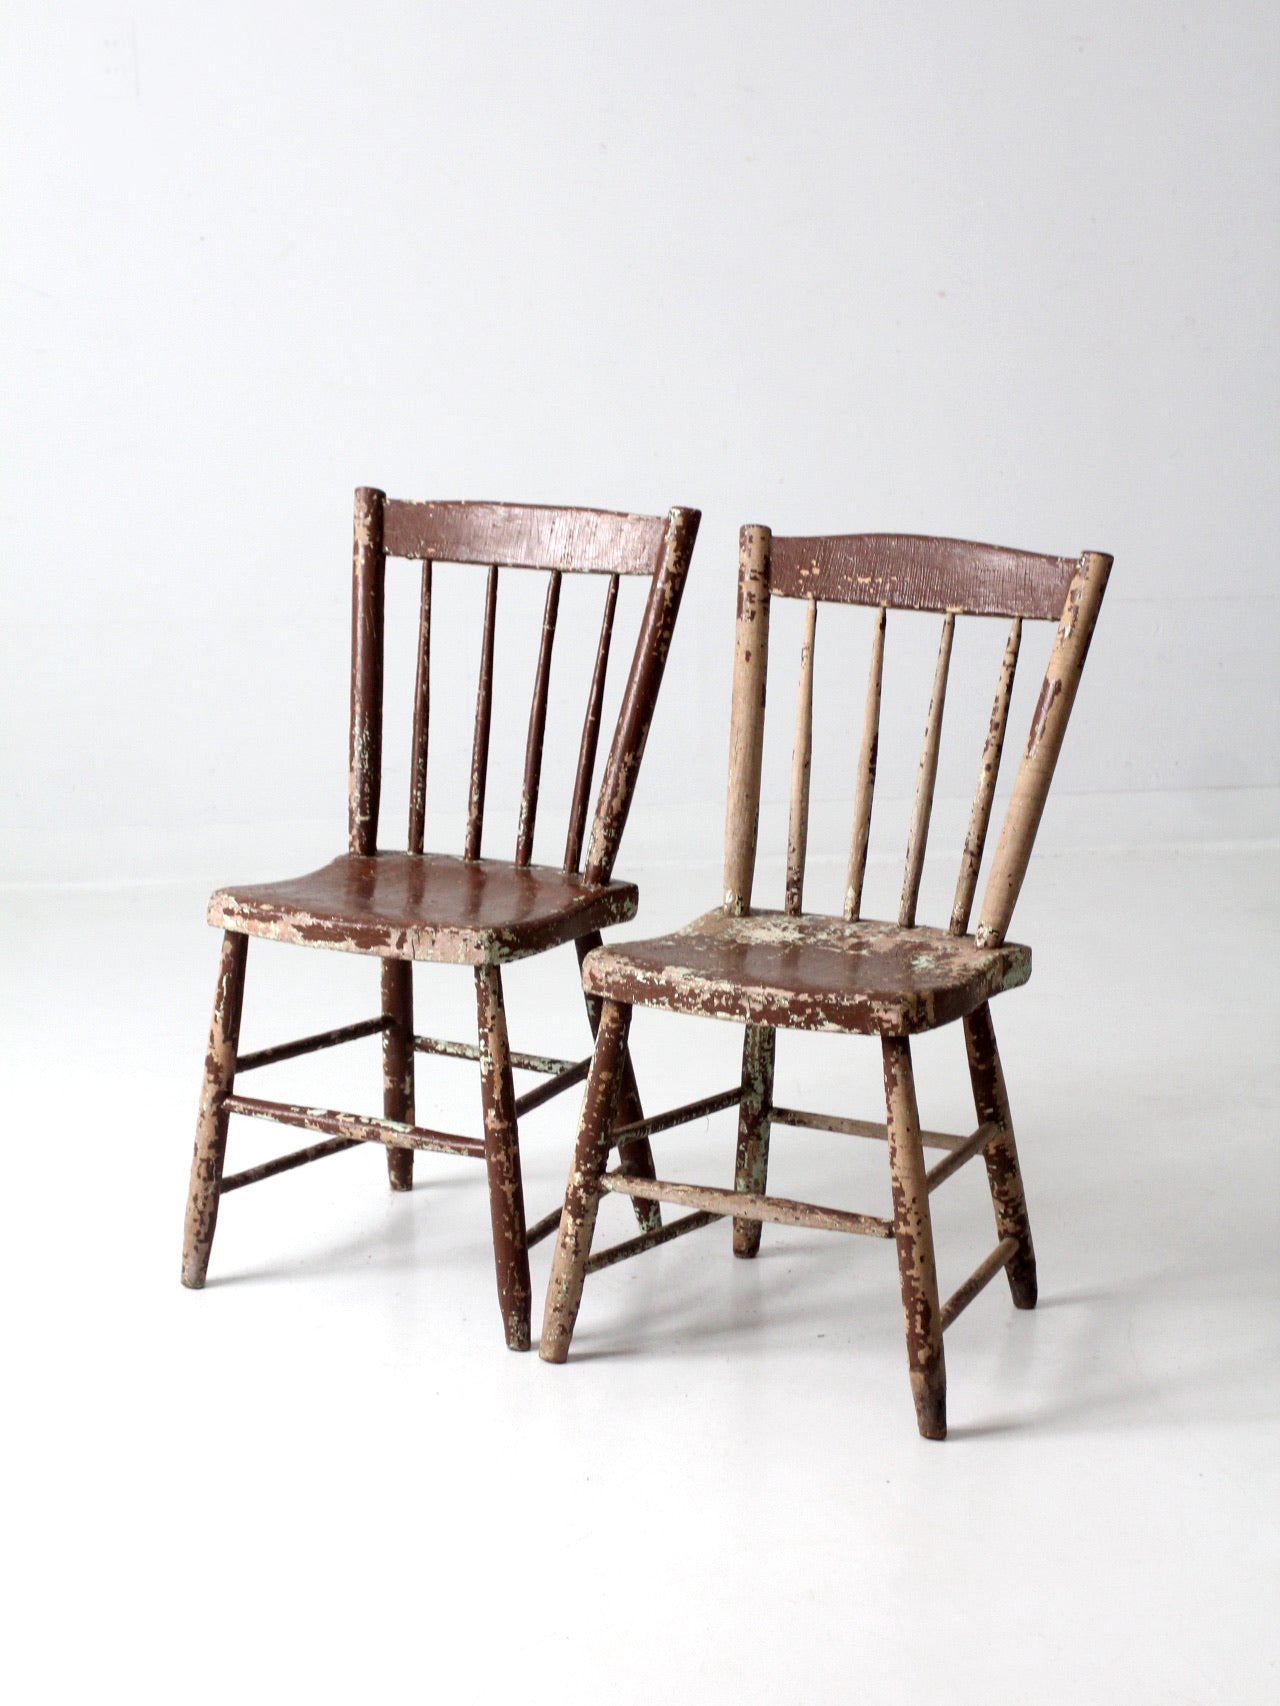 antique chippy paint farmhouse chairs pair